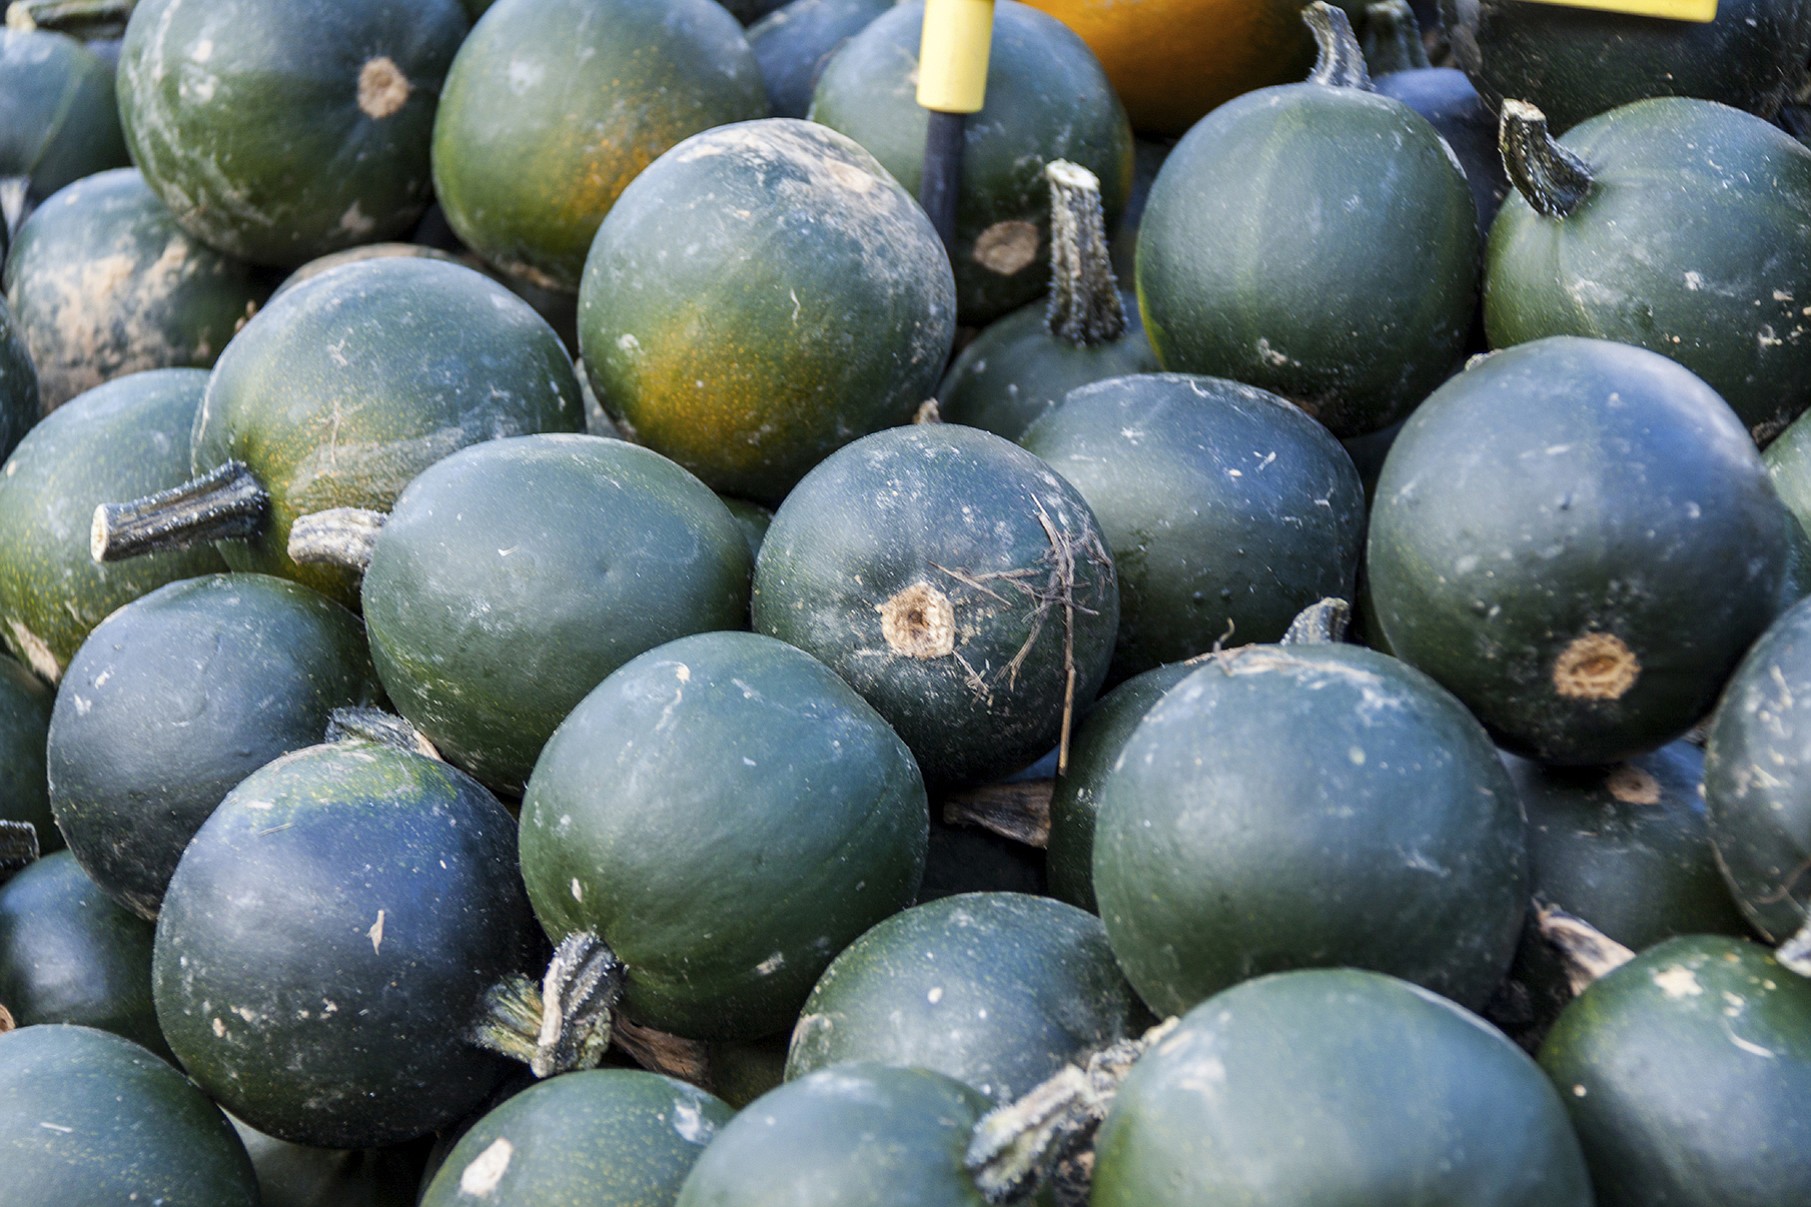 Gem squash are also known botanically as cucurbita pepo.